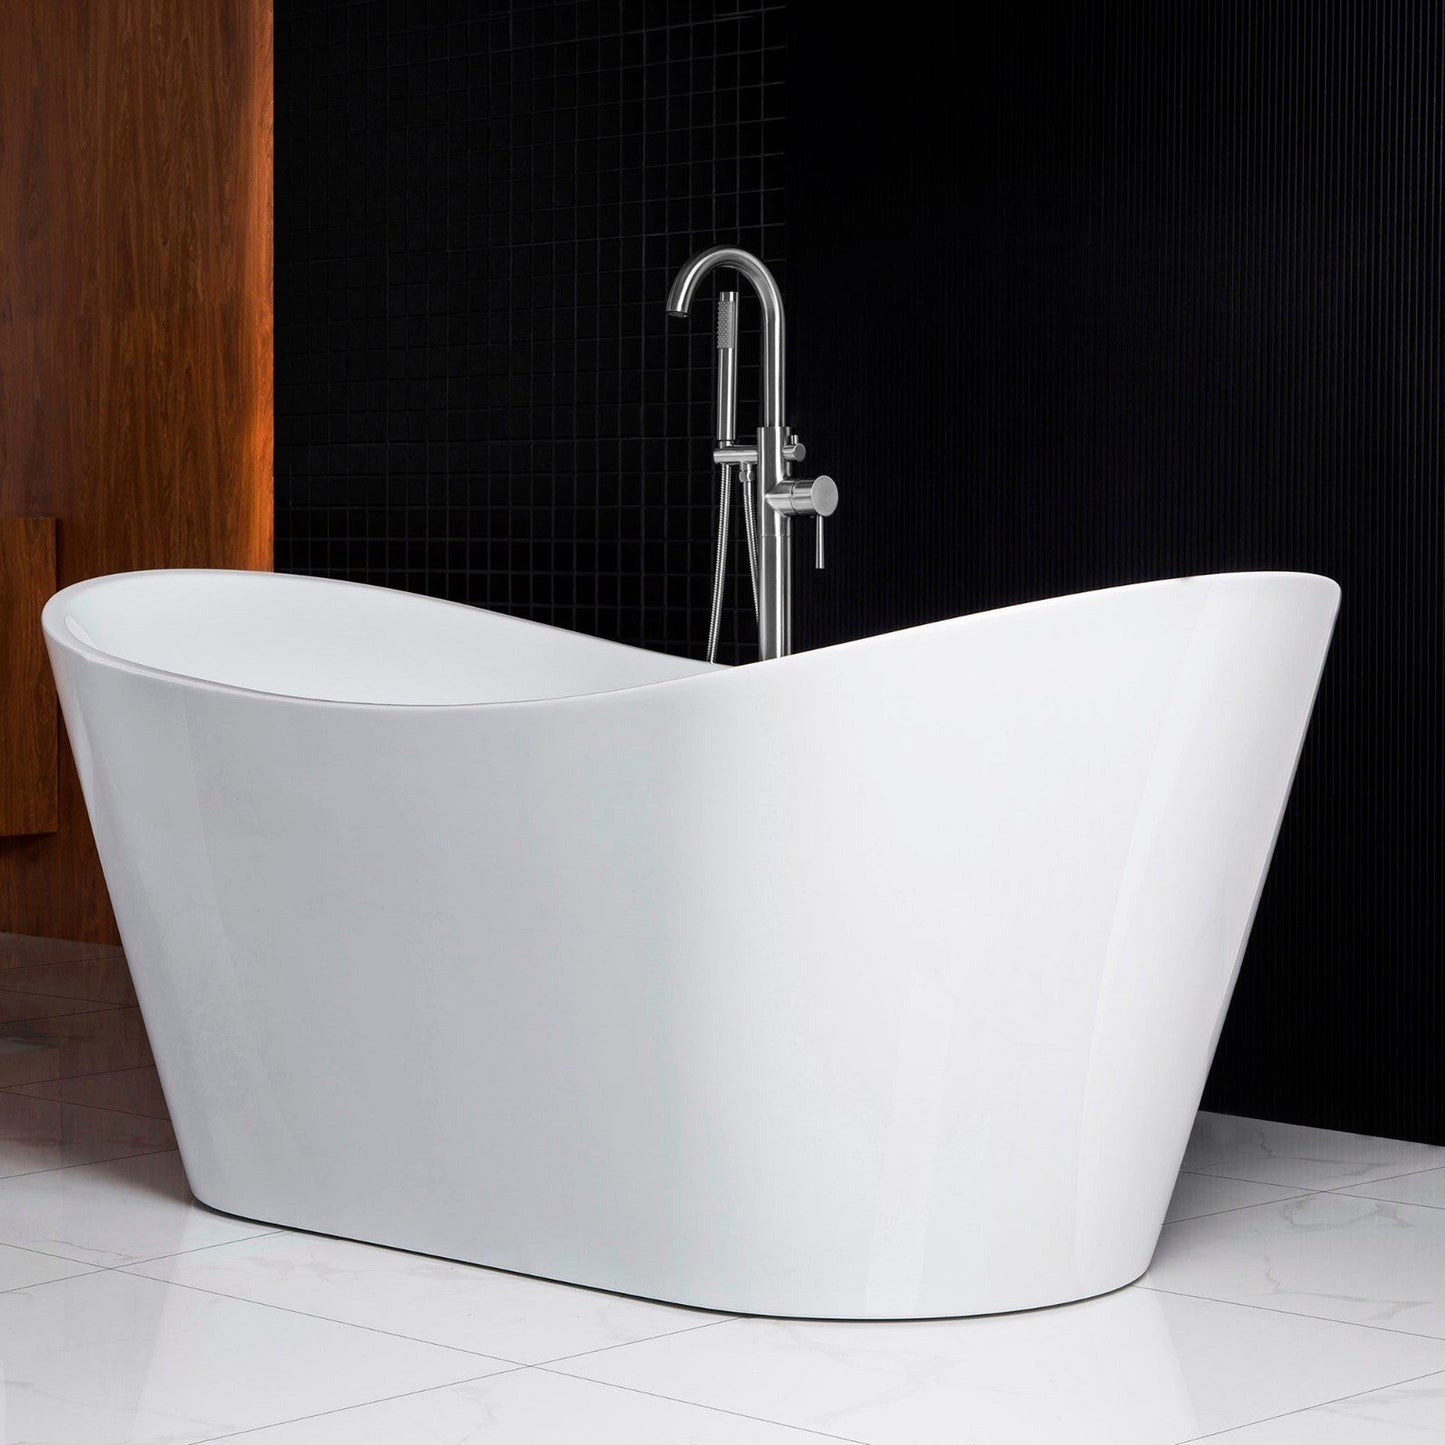 WoodBridge B0017 71" White Acrylic Freestanding Soaking Bathtub With Chrome Drain, Overflow, F0071CHVT Tub Filler and Caddy Tray